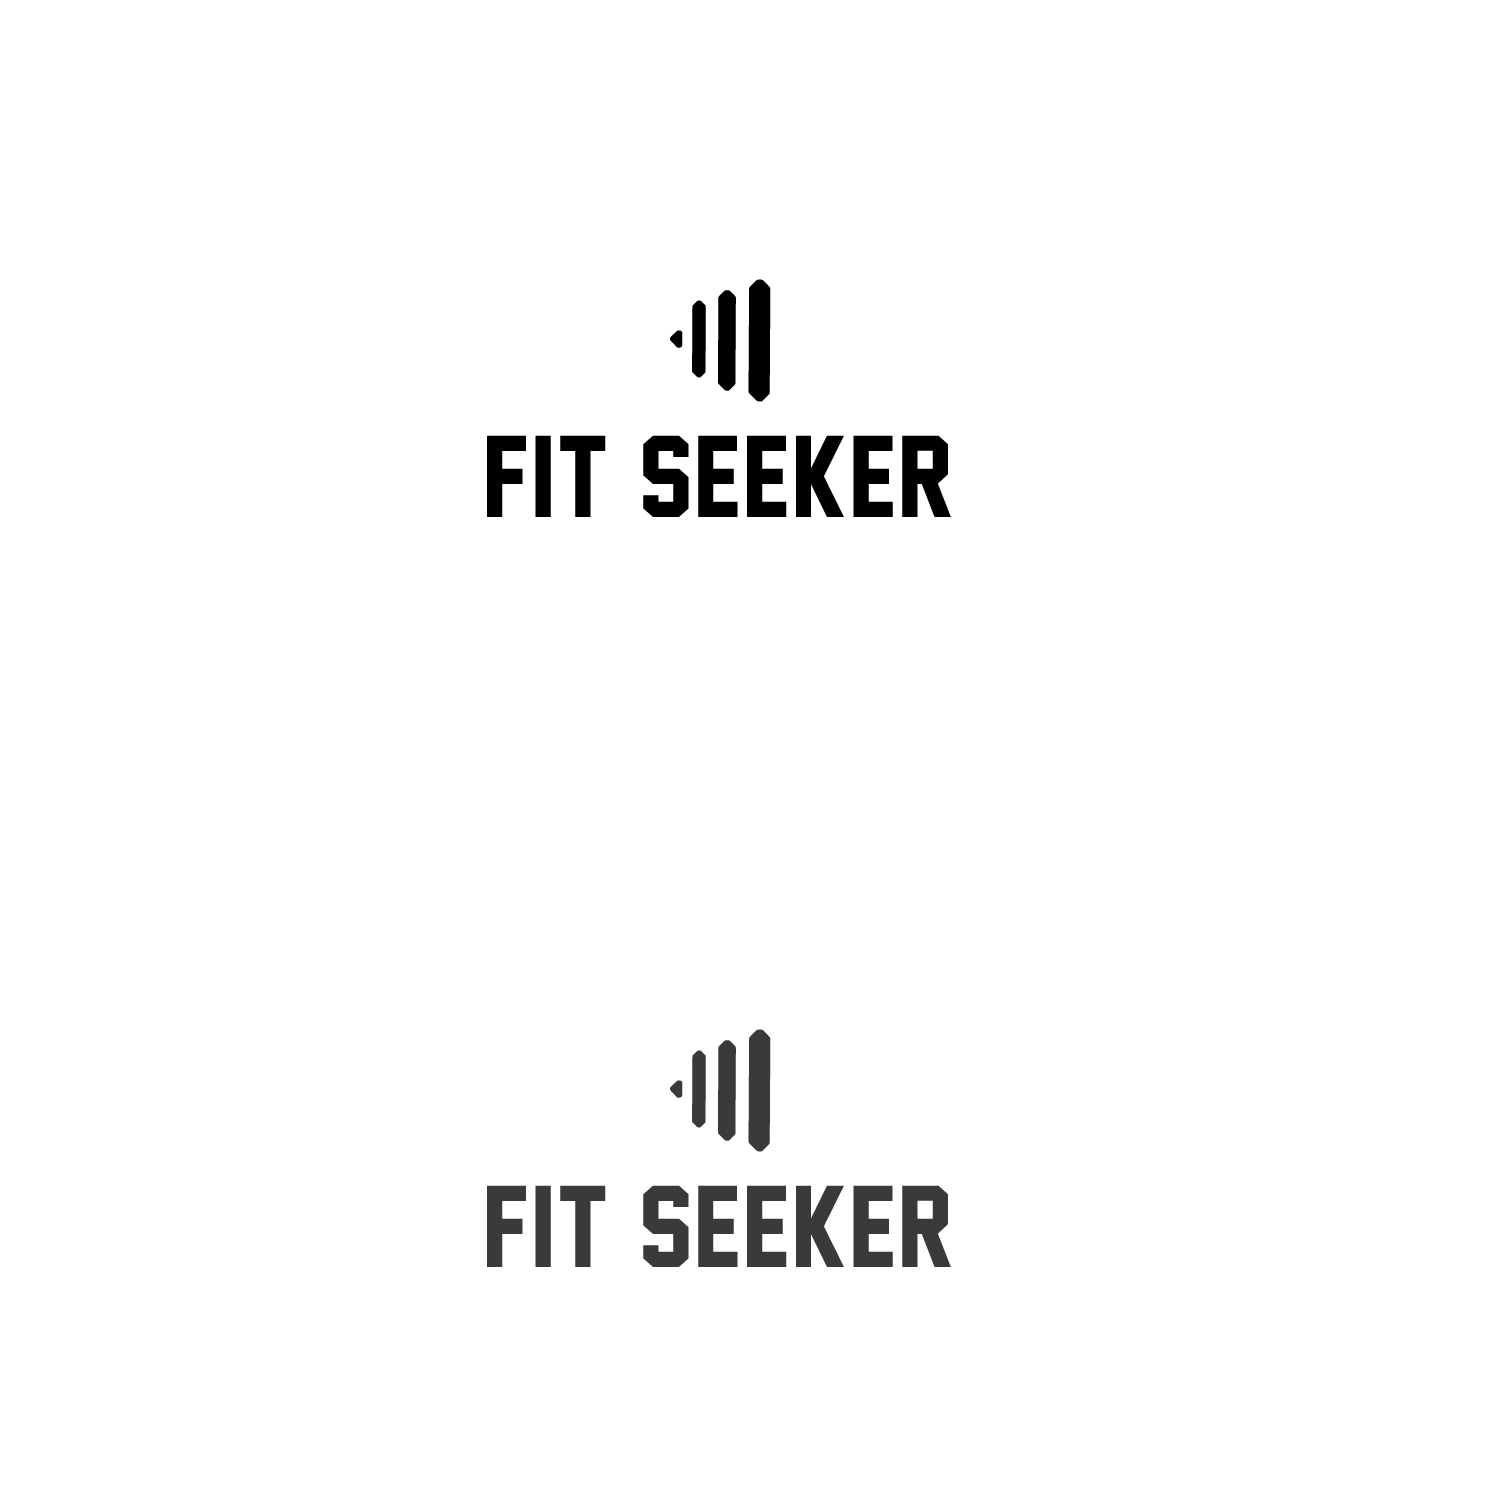 Seeker Logo - Bold, Playful, Fitness Logo Design for Fit Seeker by Eppeok. Design